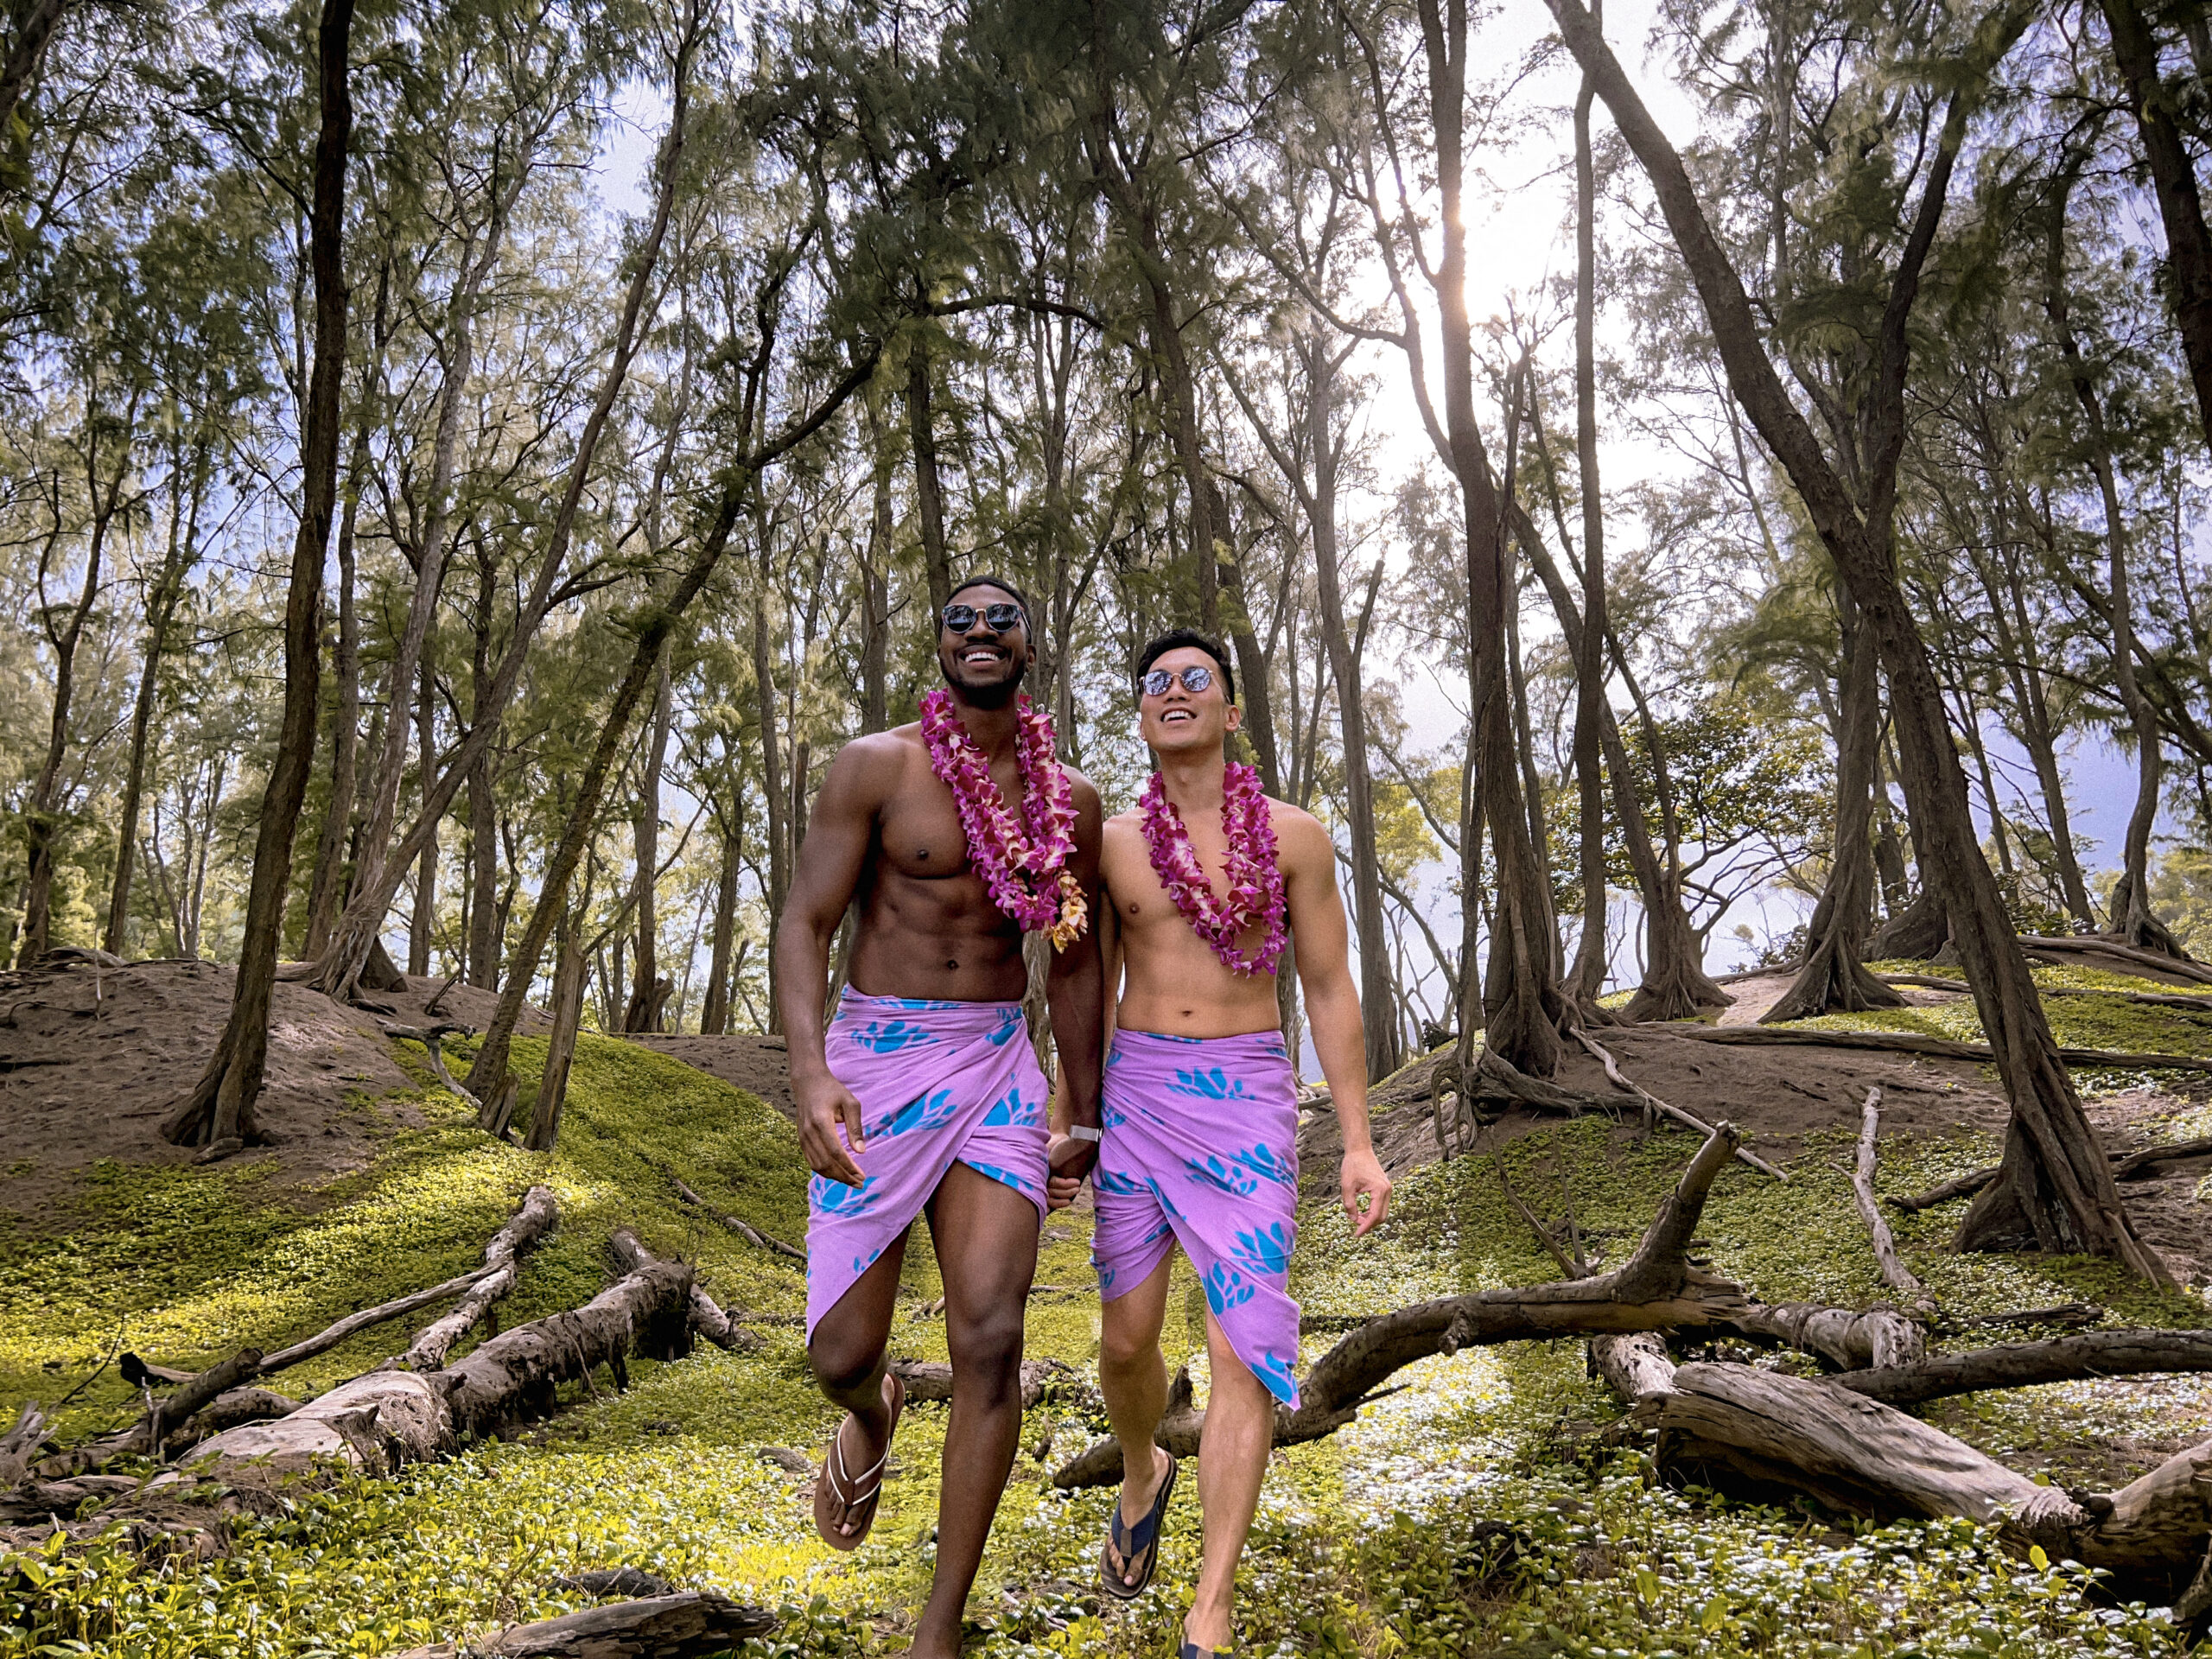 Teraj with his boyfriend Barry Hoy in Pololu, Hawaii (Photo Credit: Teraj)